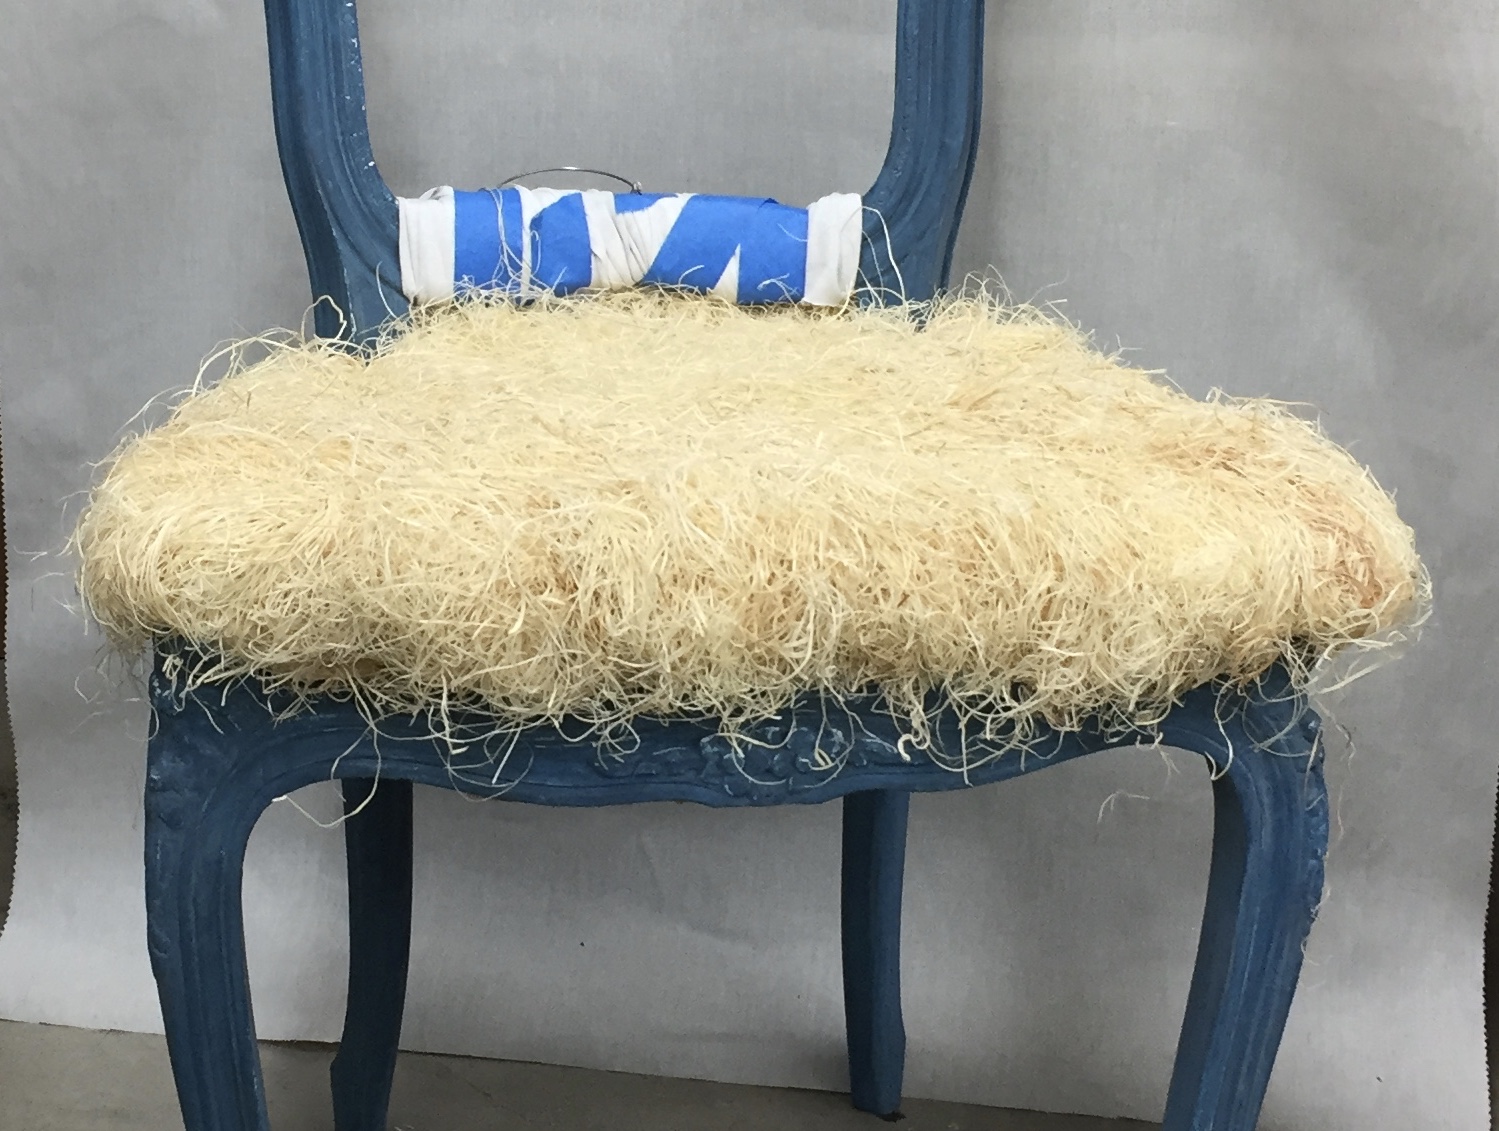 Buckminster Upholstery - Wood wool instead of straw.